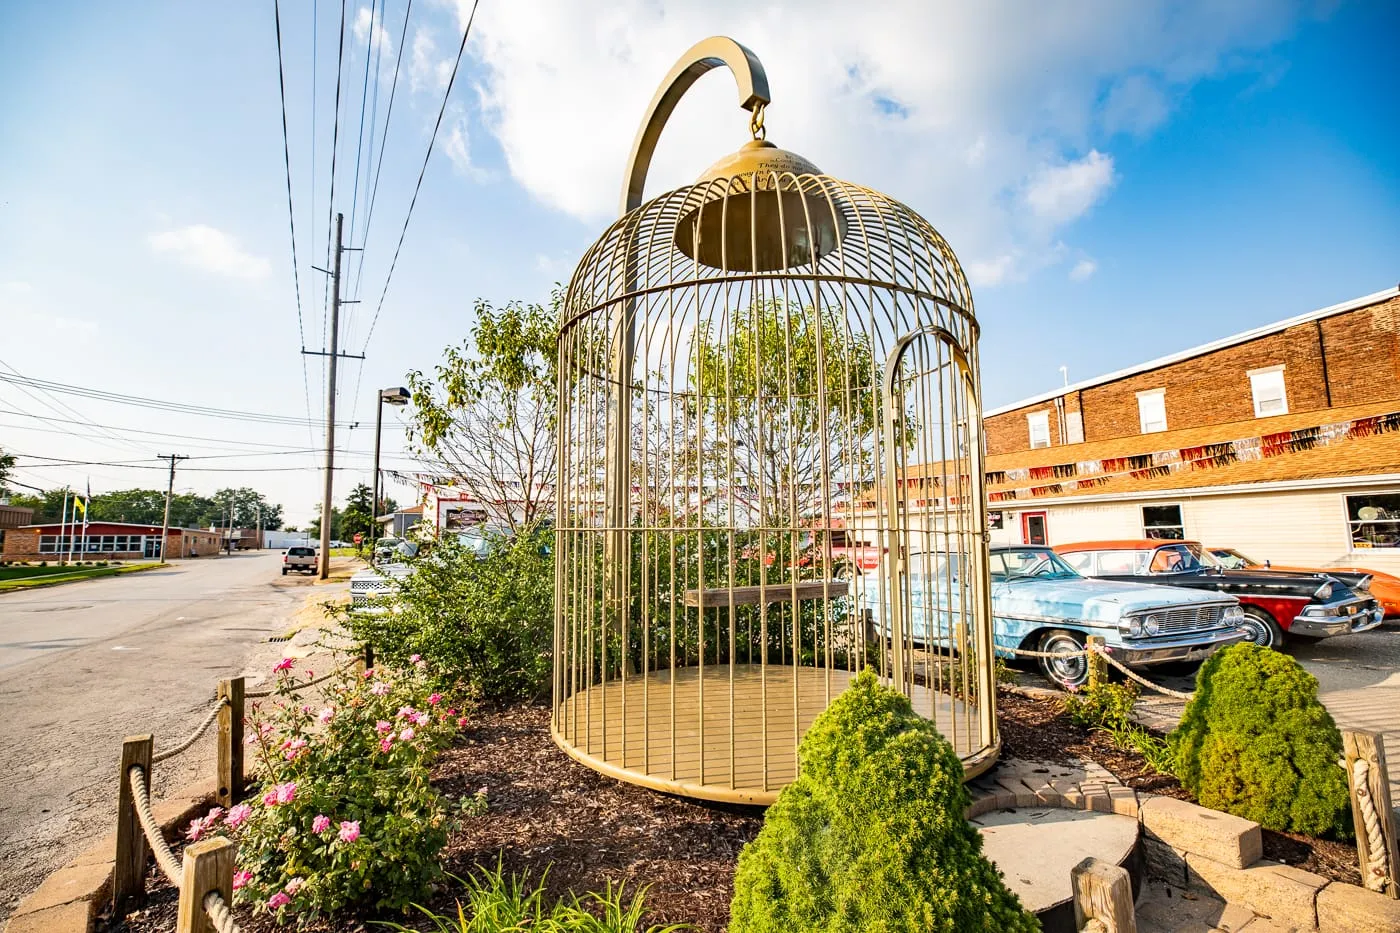 Big Birdcage in Casey, Illinois roadside attraction